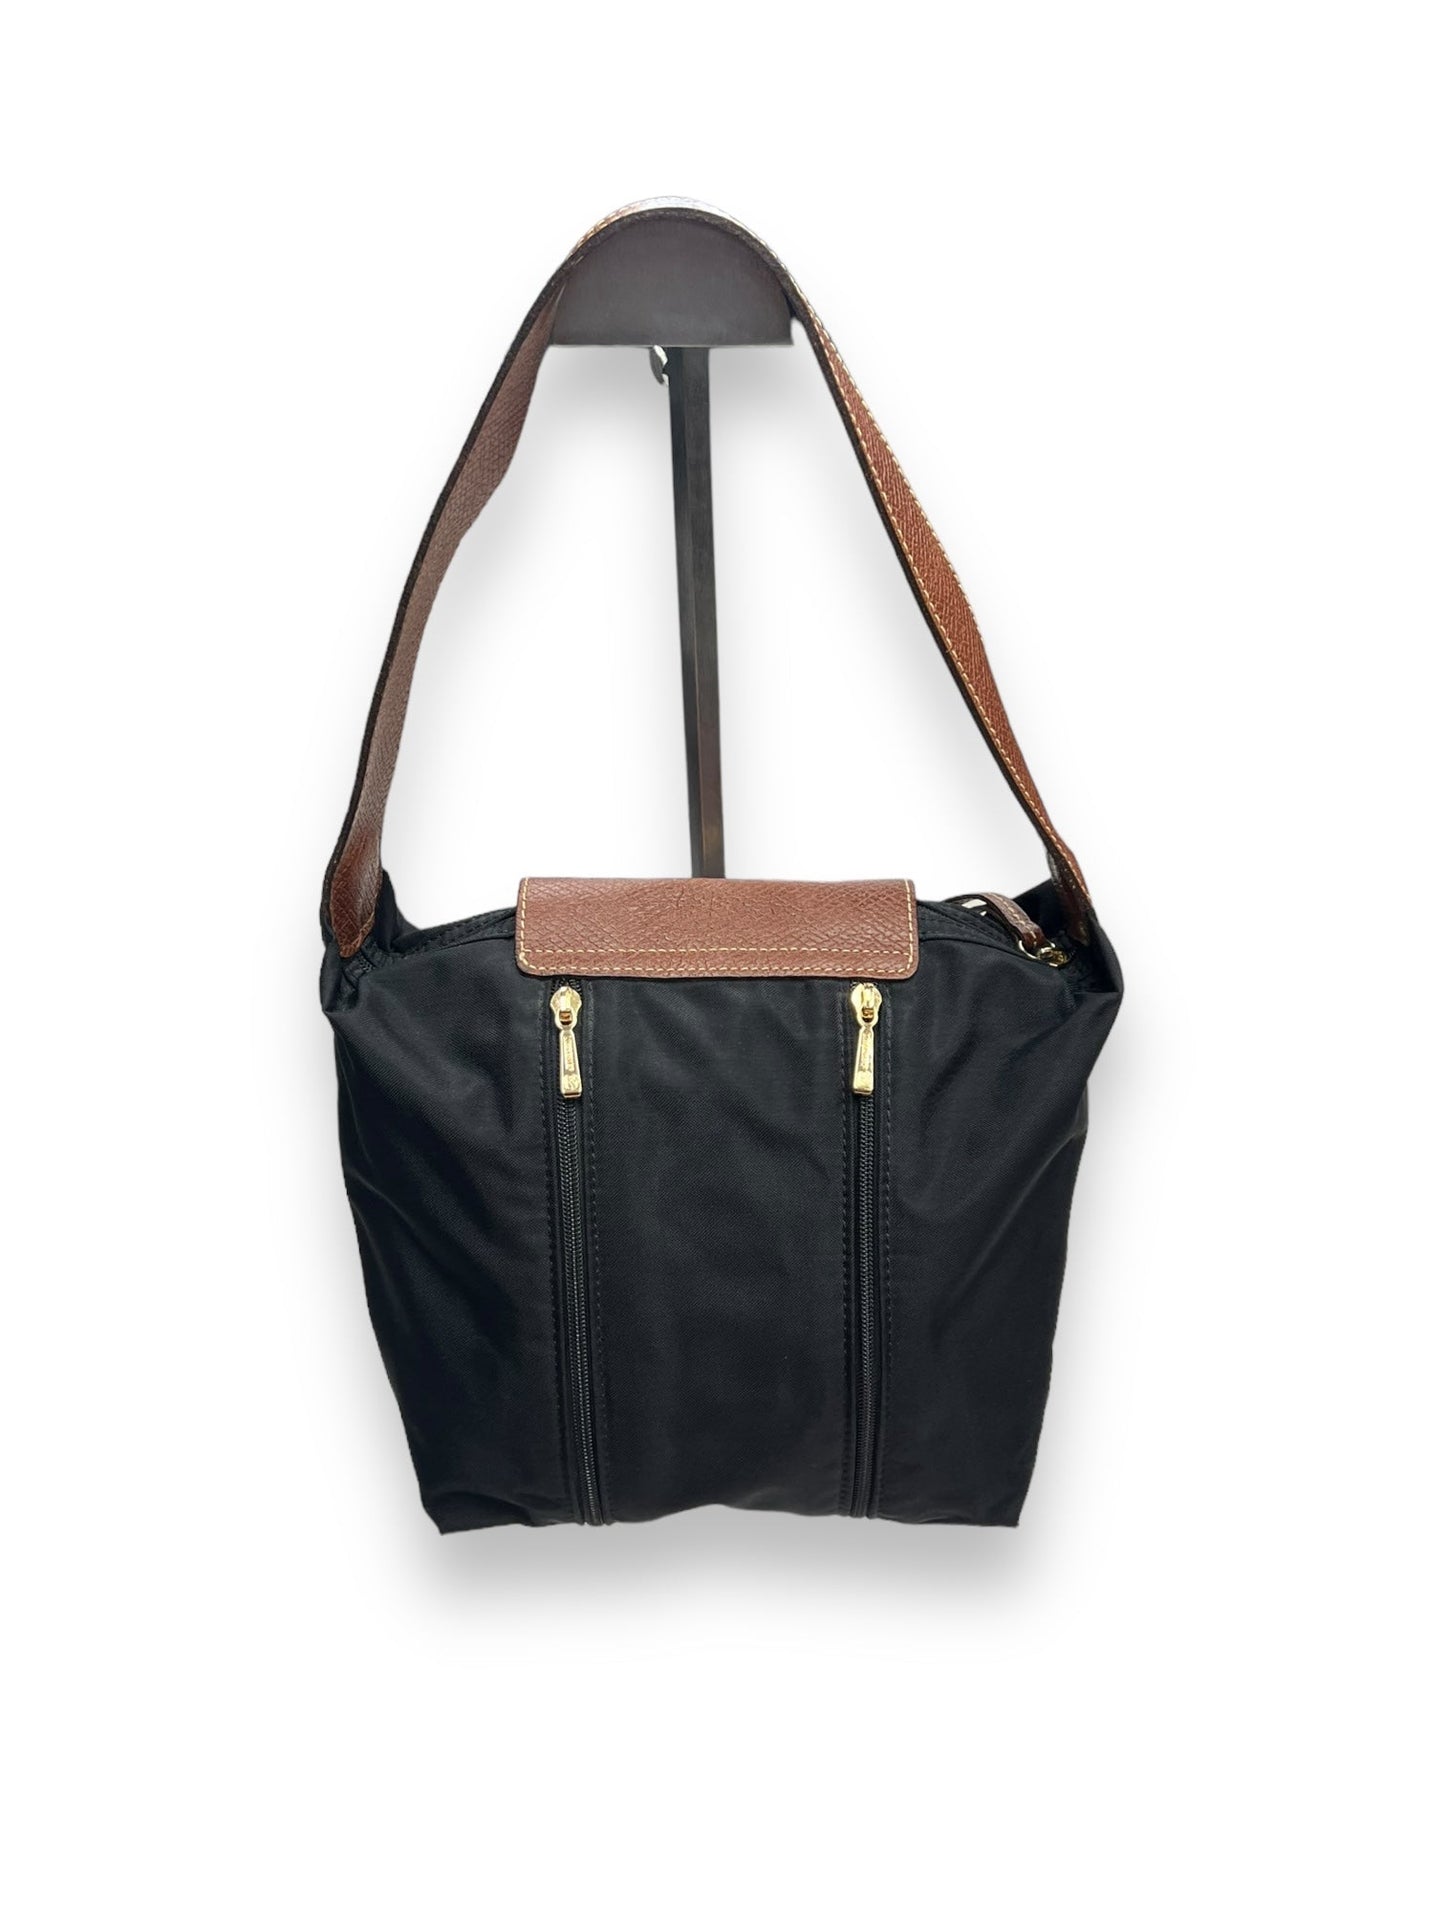 Handbag Longchamp, Size Small